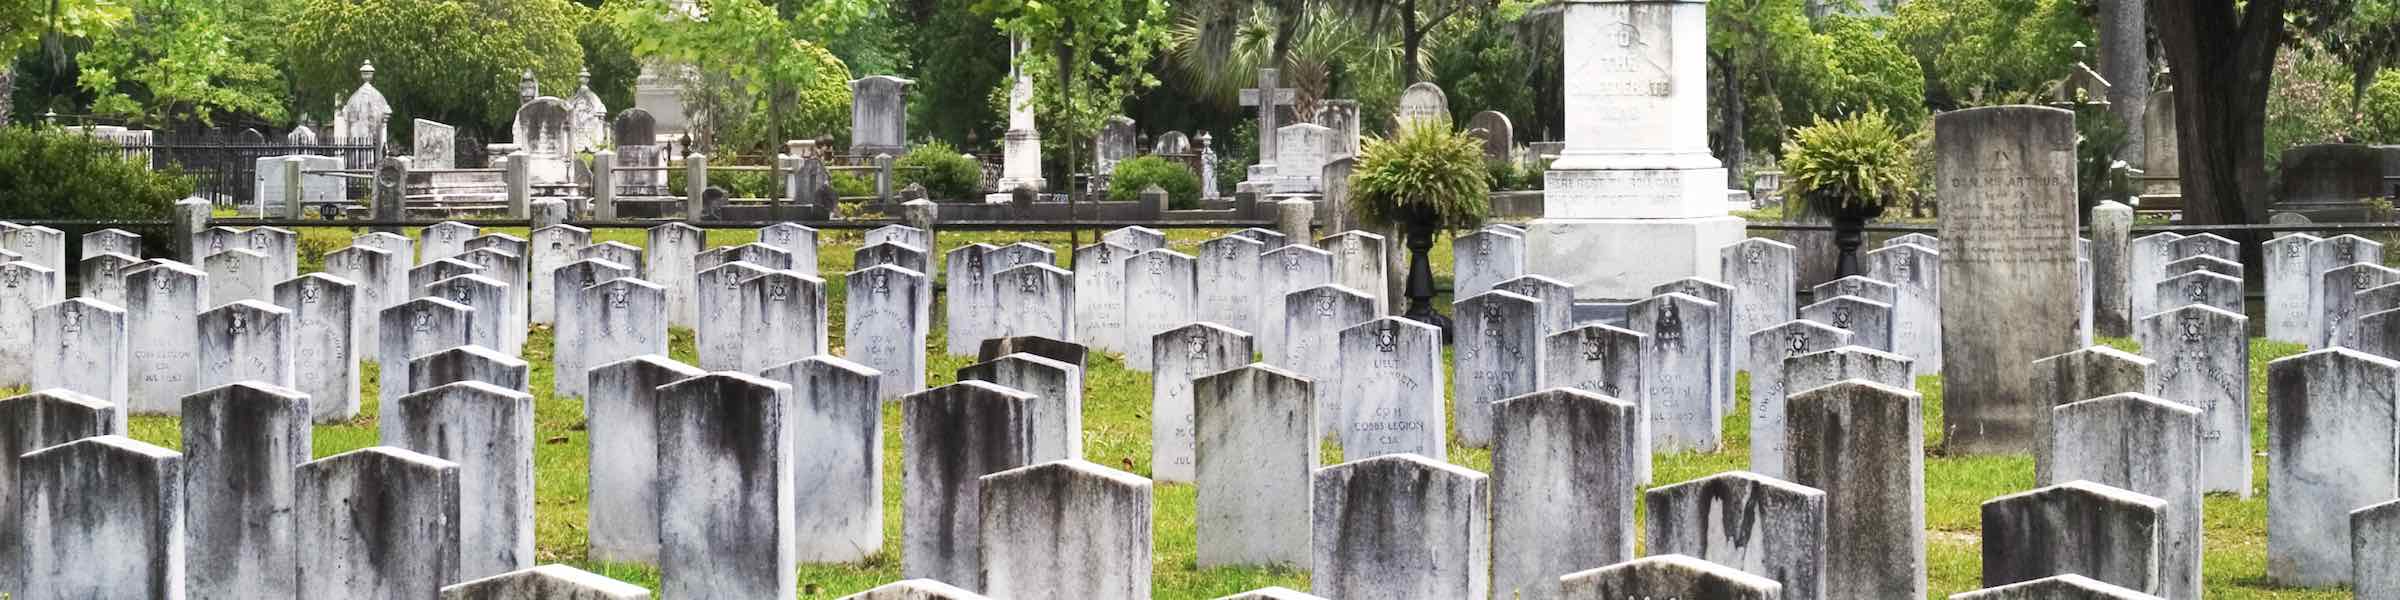 Civil War graves in Laurel Grove North Cemetery, Savannah, GA.